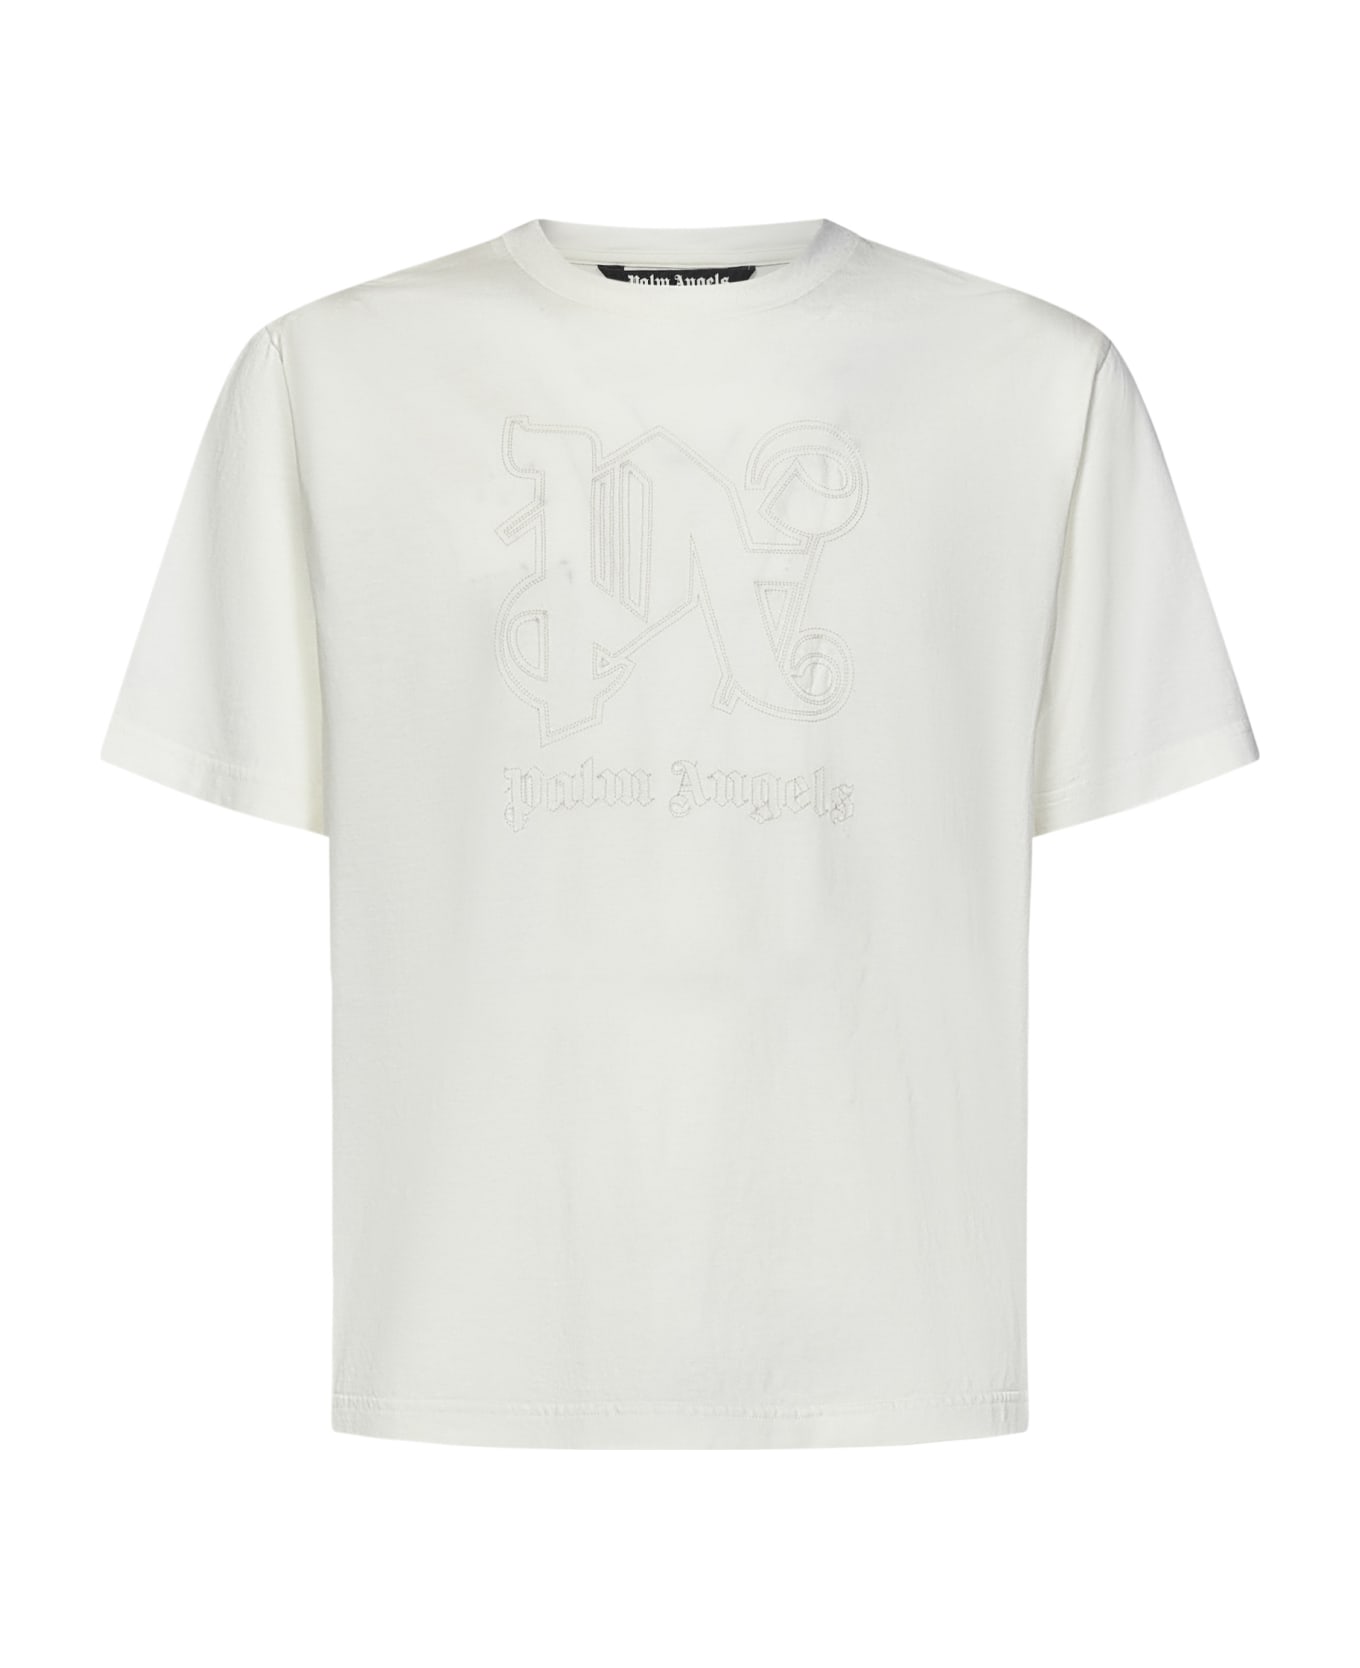 Palm Angels T-shirt - White